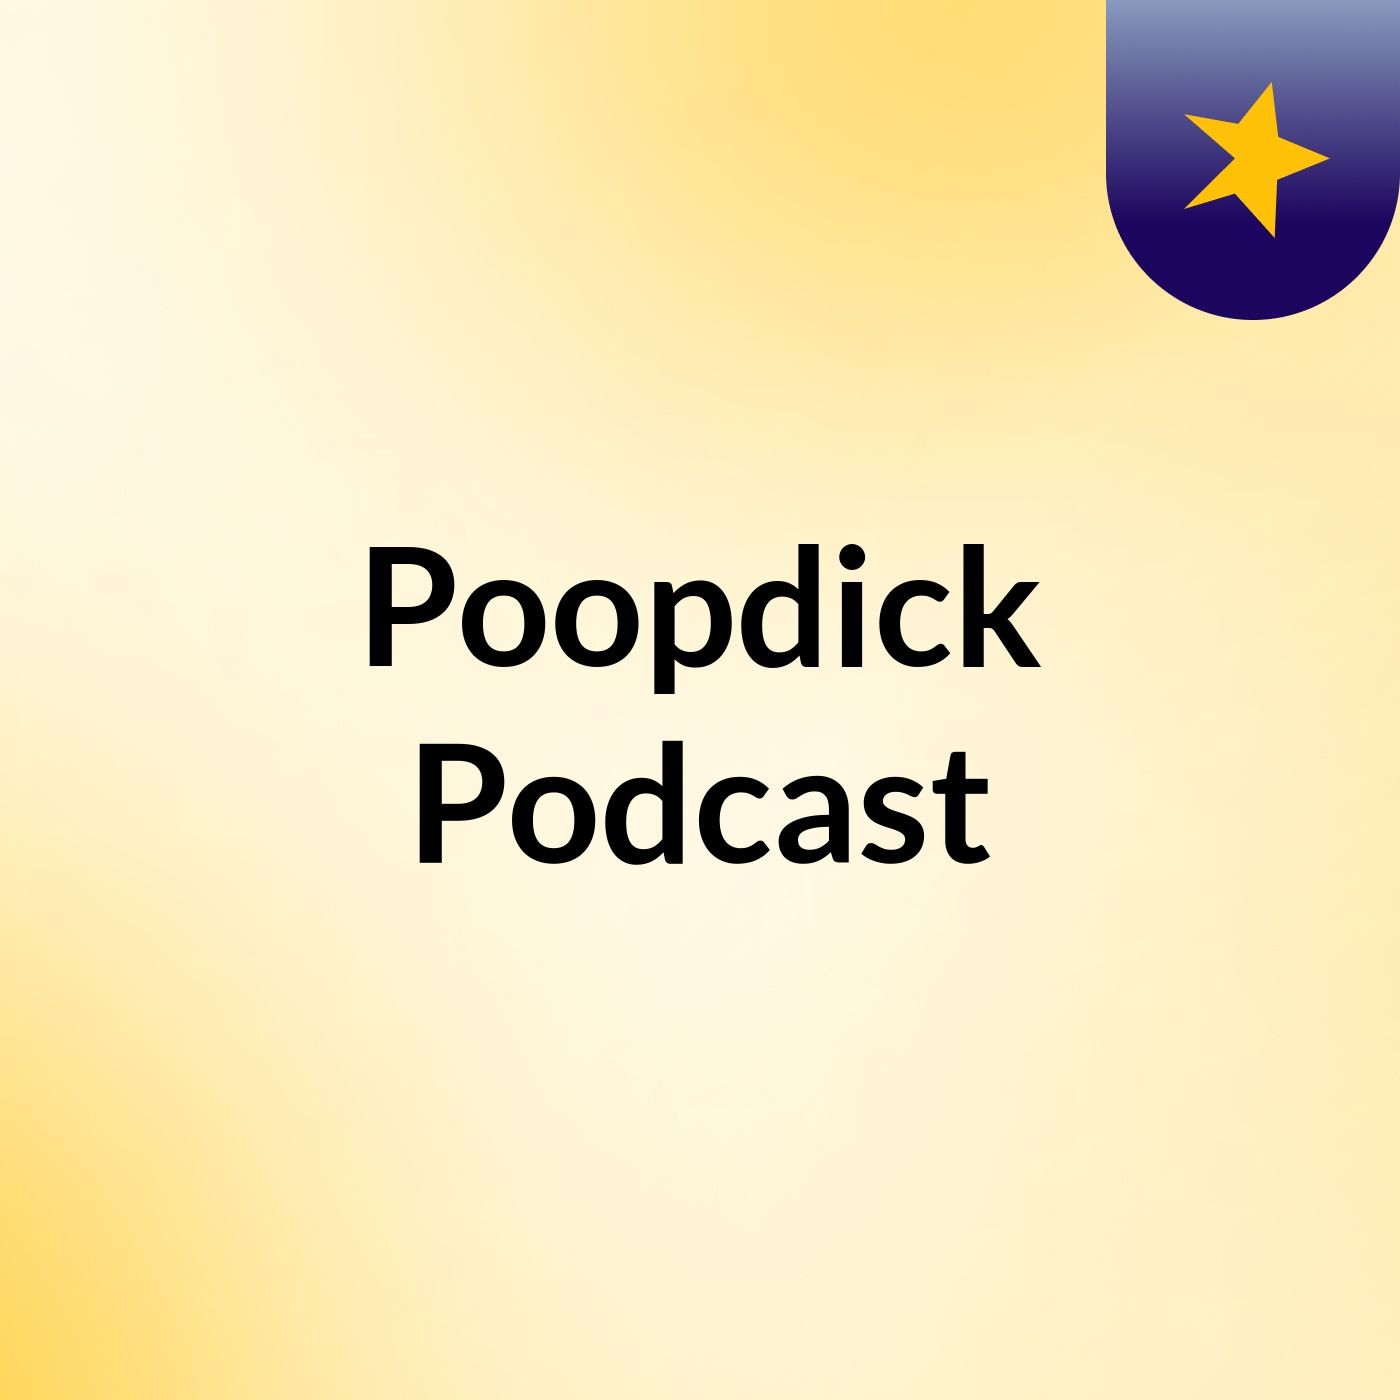 Poopdick Podcast